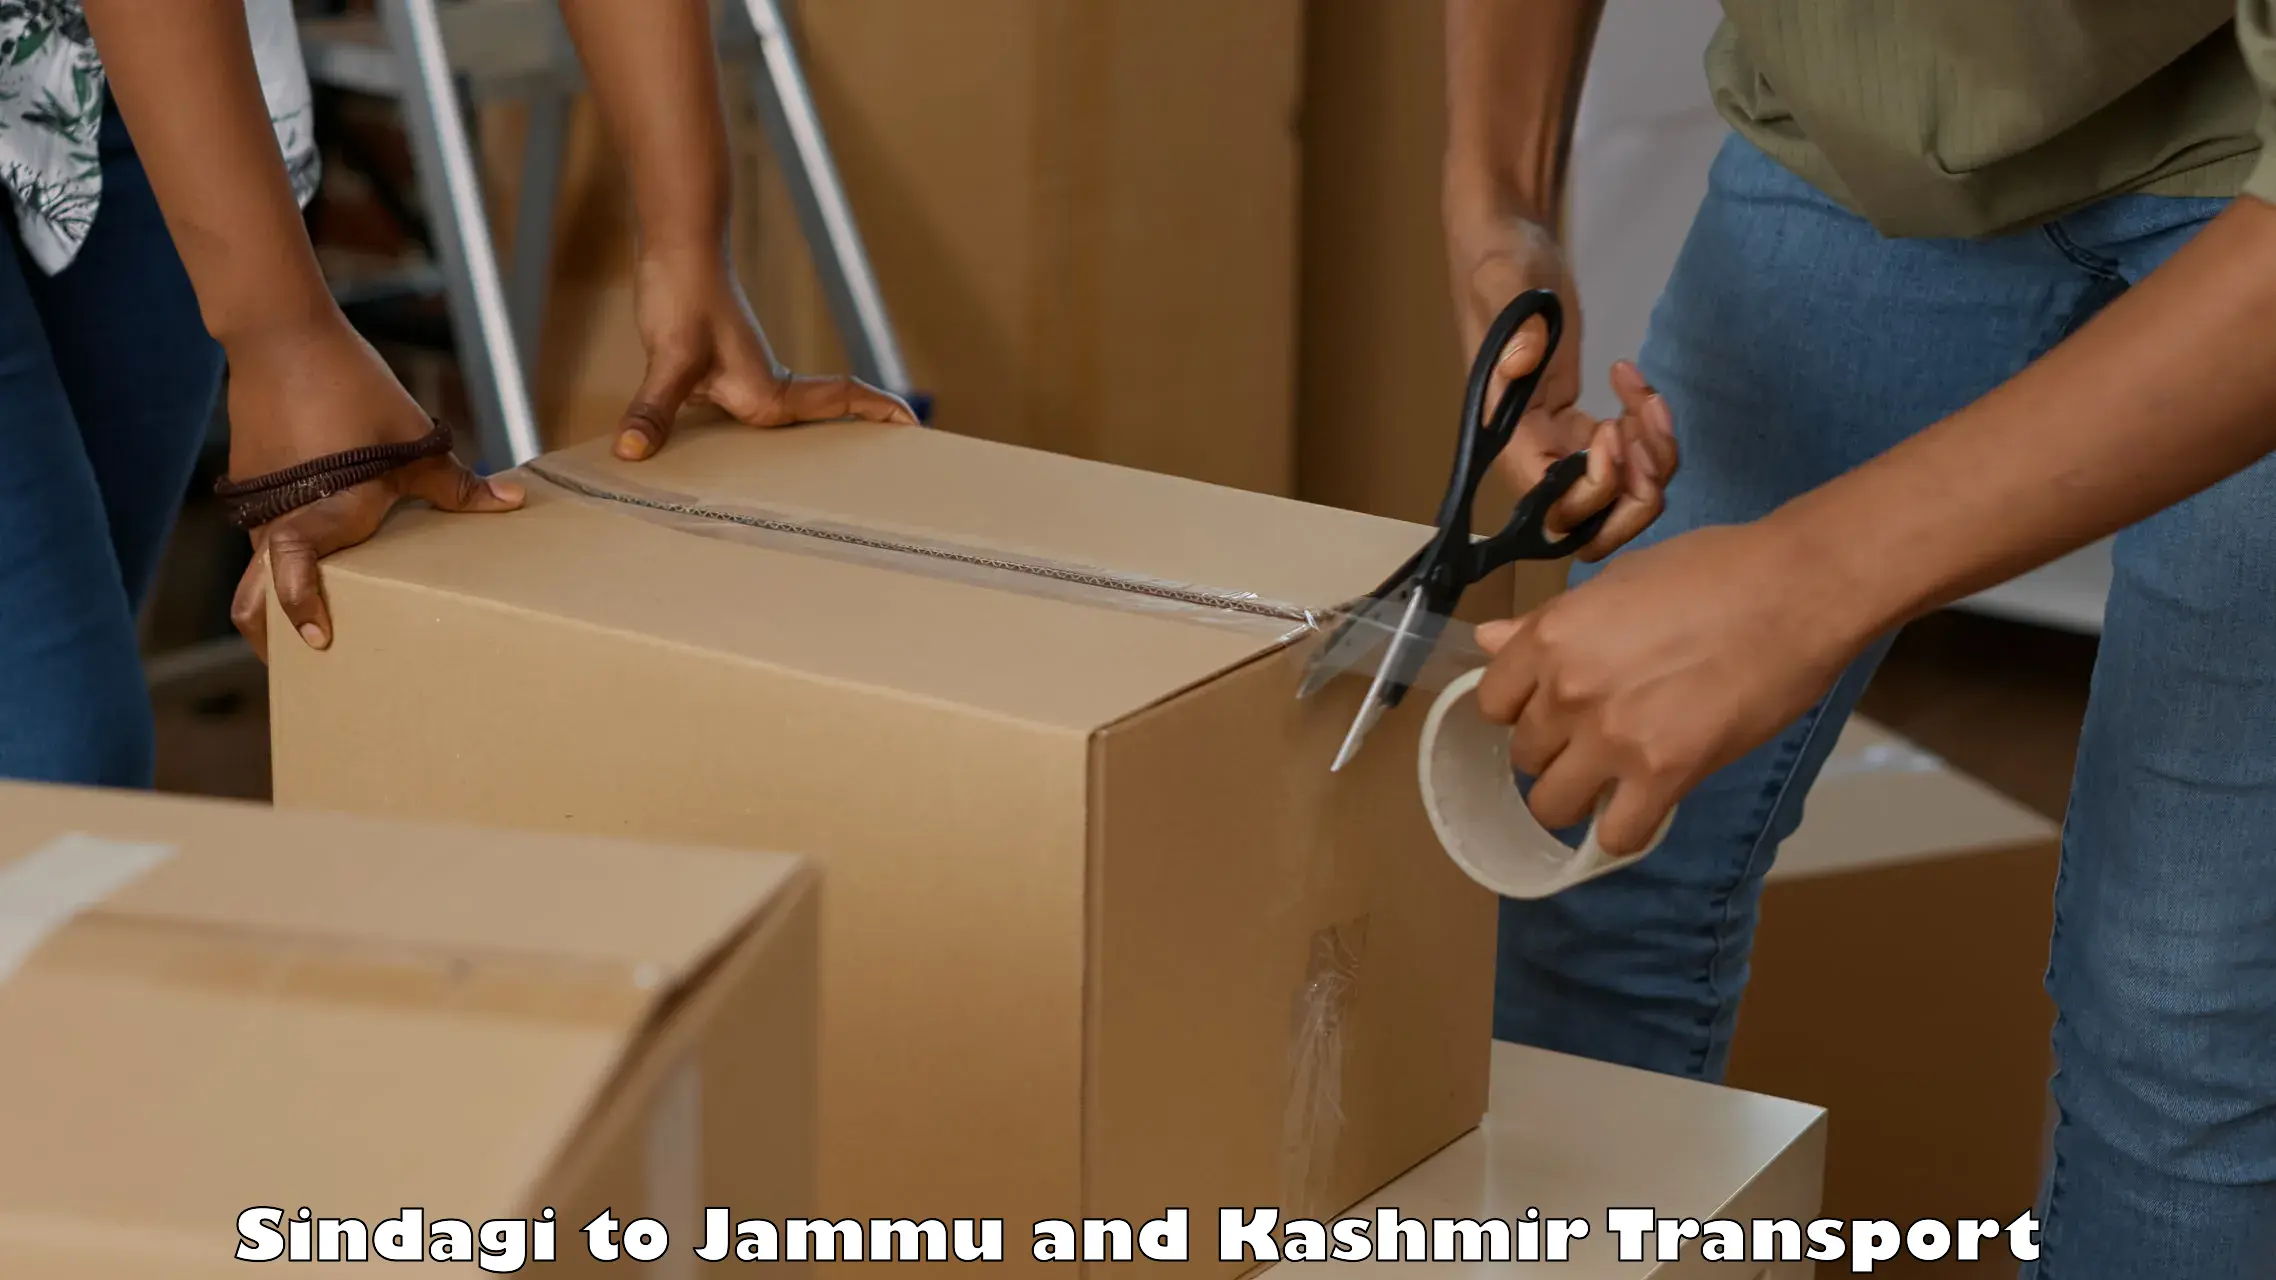 Truck transport companies in India Sindagi to Jammu and Kashmir